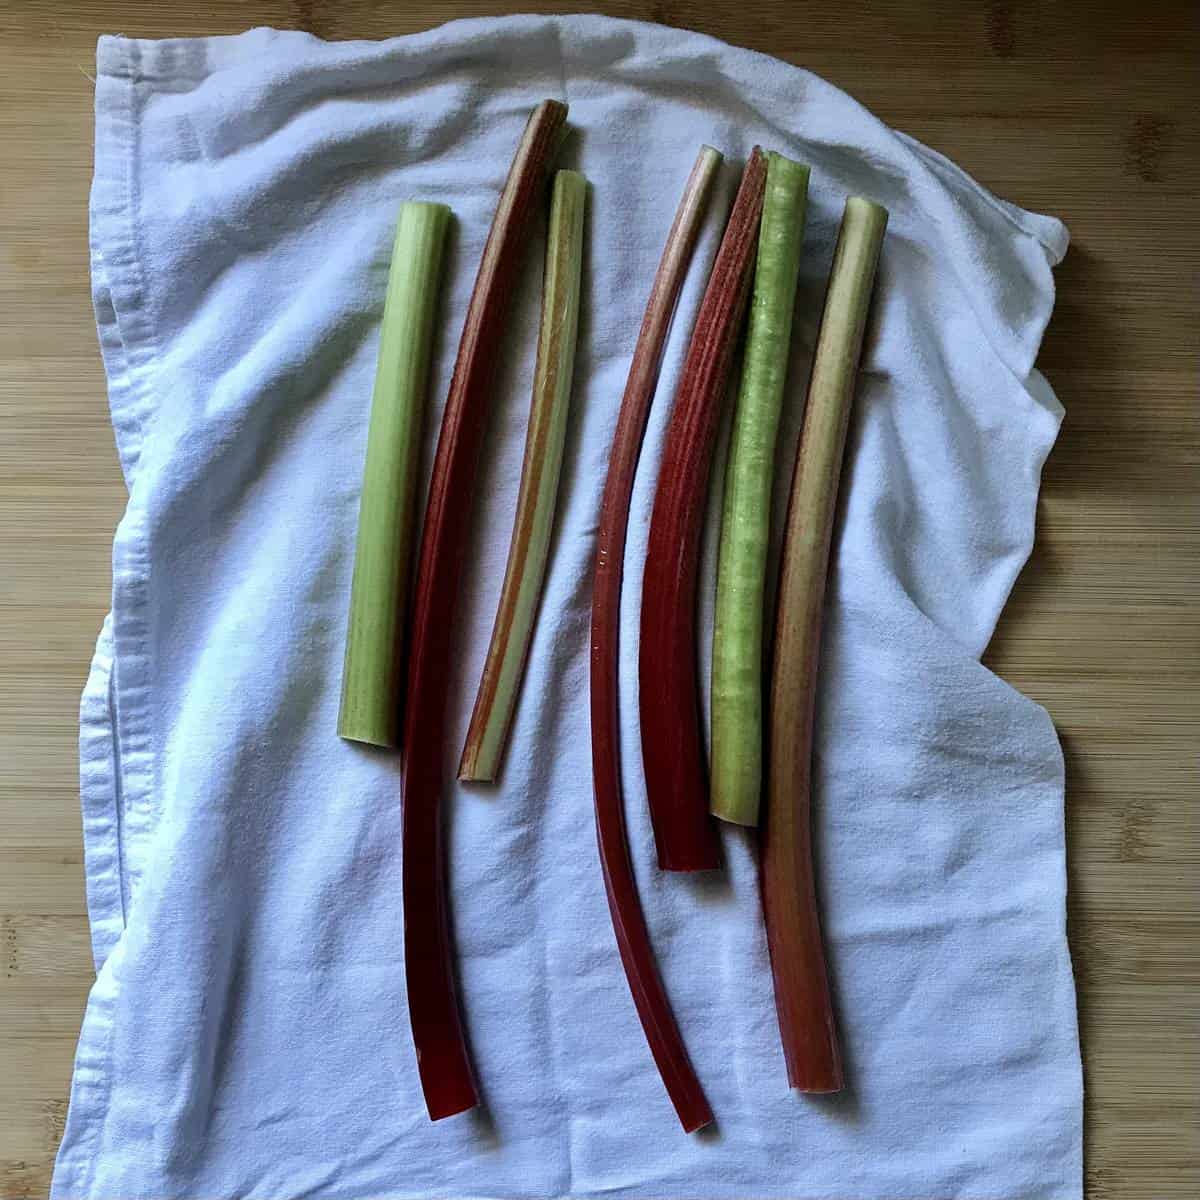 Rhubarb stalks on a clean dish towel.